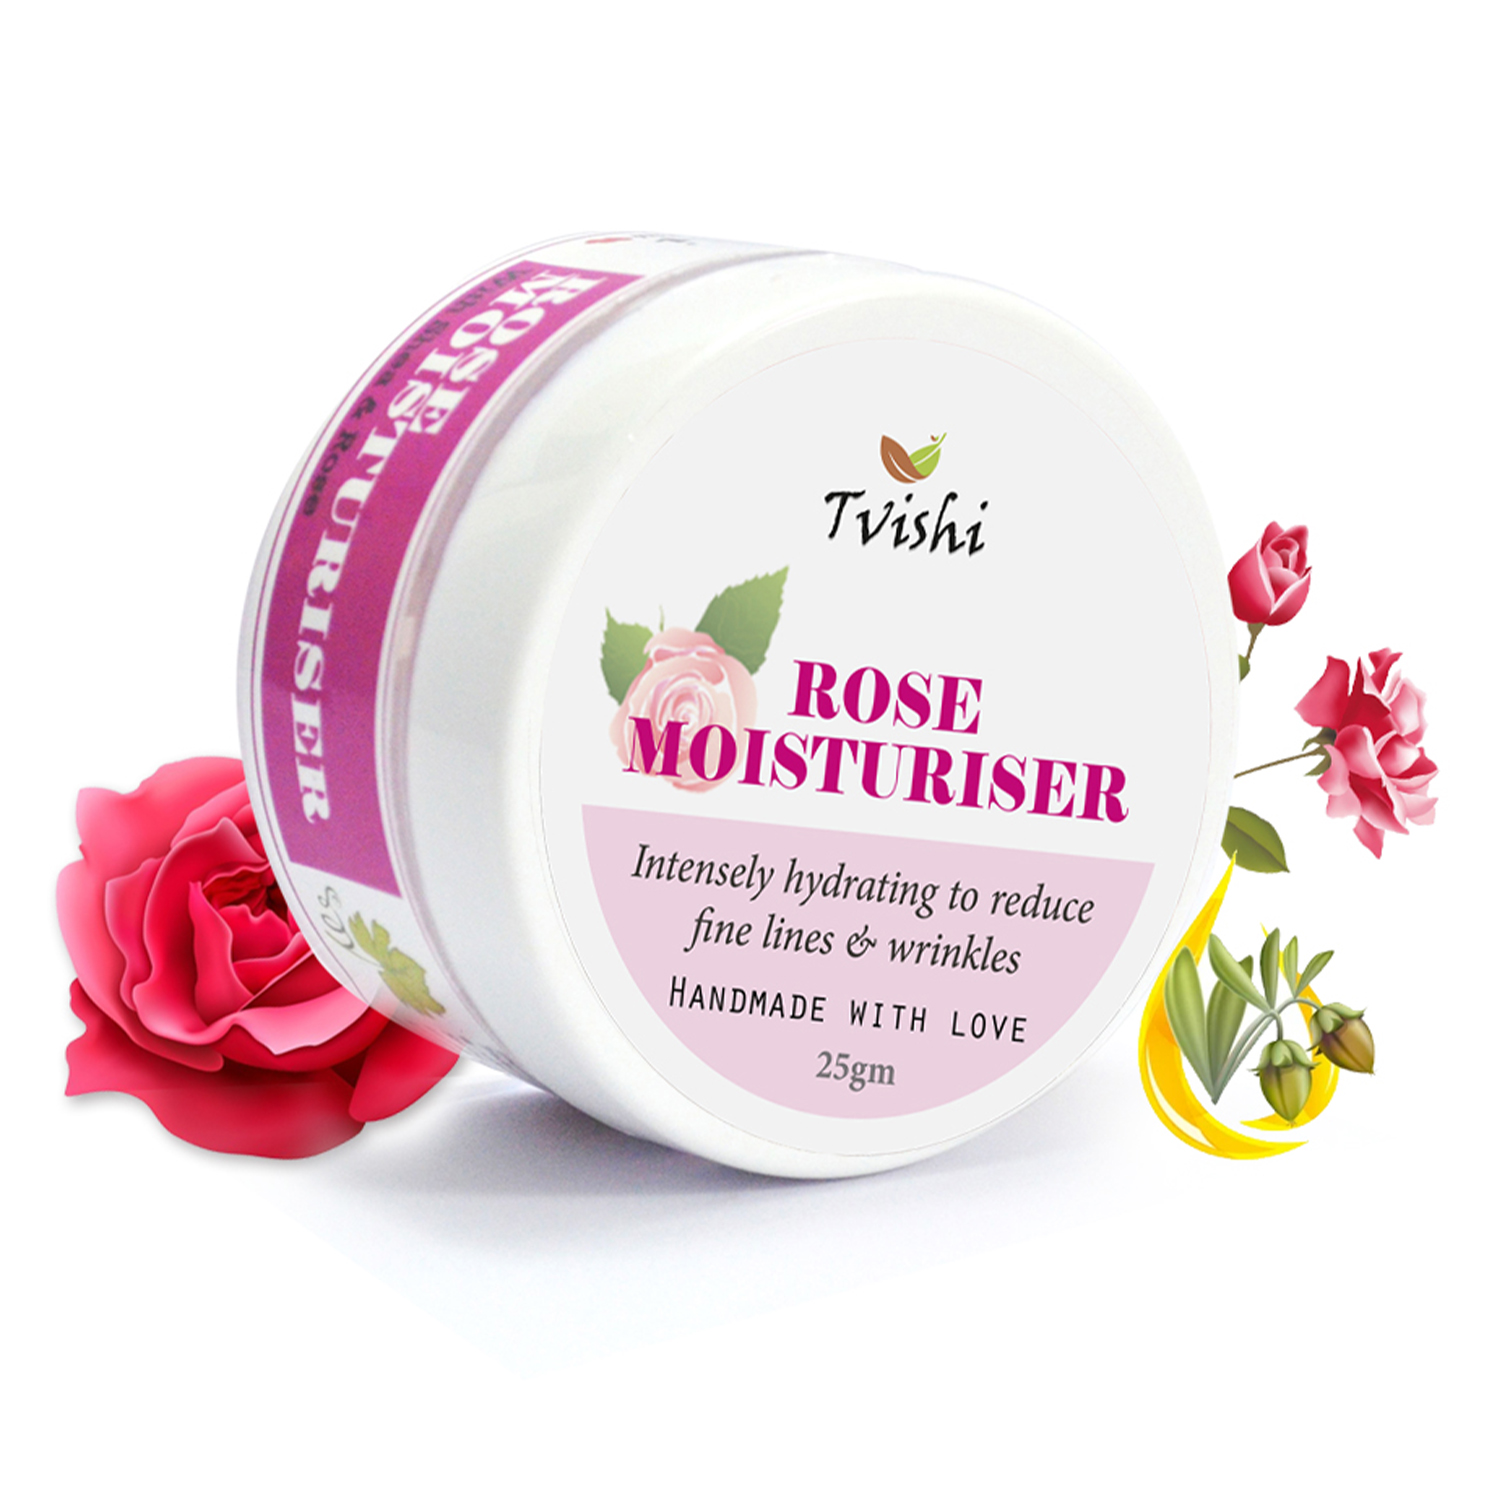 Tvishi Handmade Rose Moisturiser-25gm